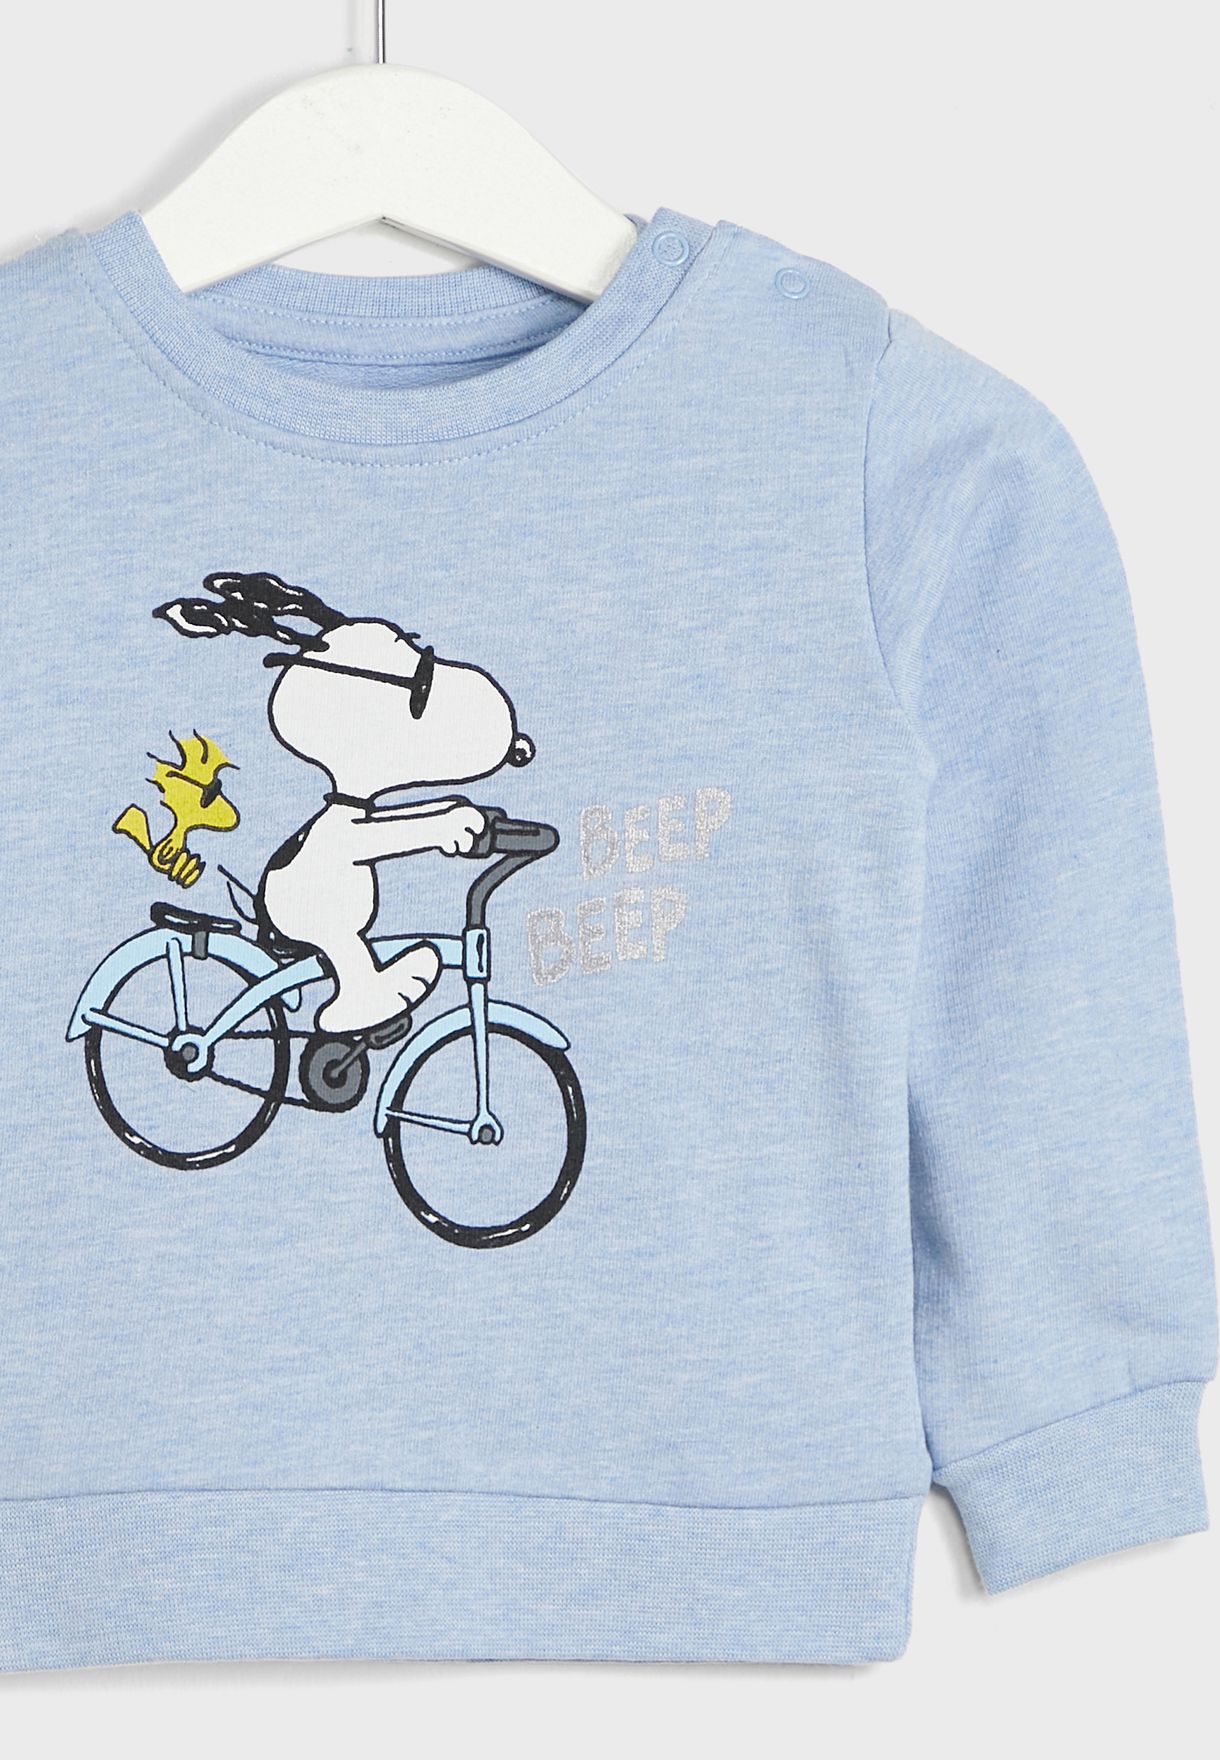 Infant Snoopy Sweatshirt